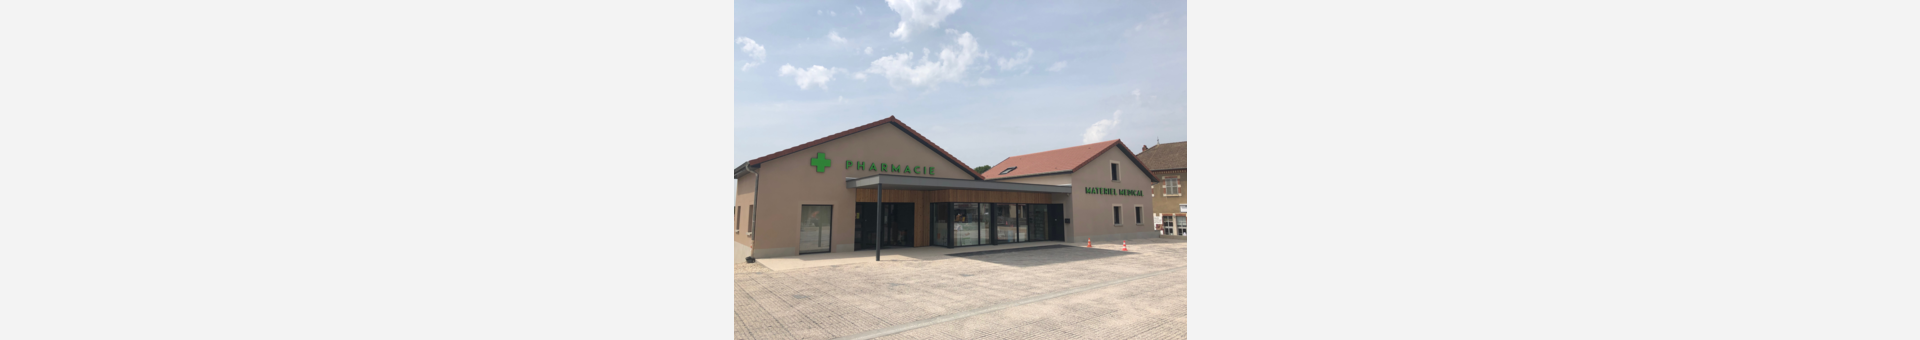 Pharmacie de la Bernardine,ORCHAMPS